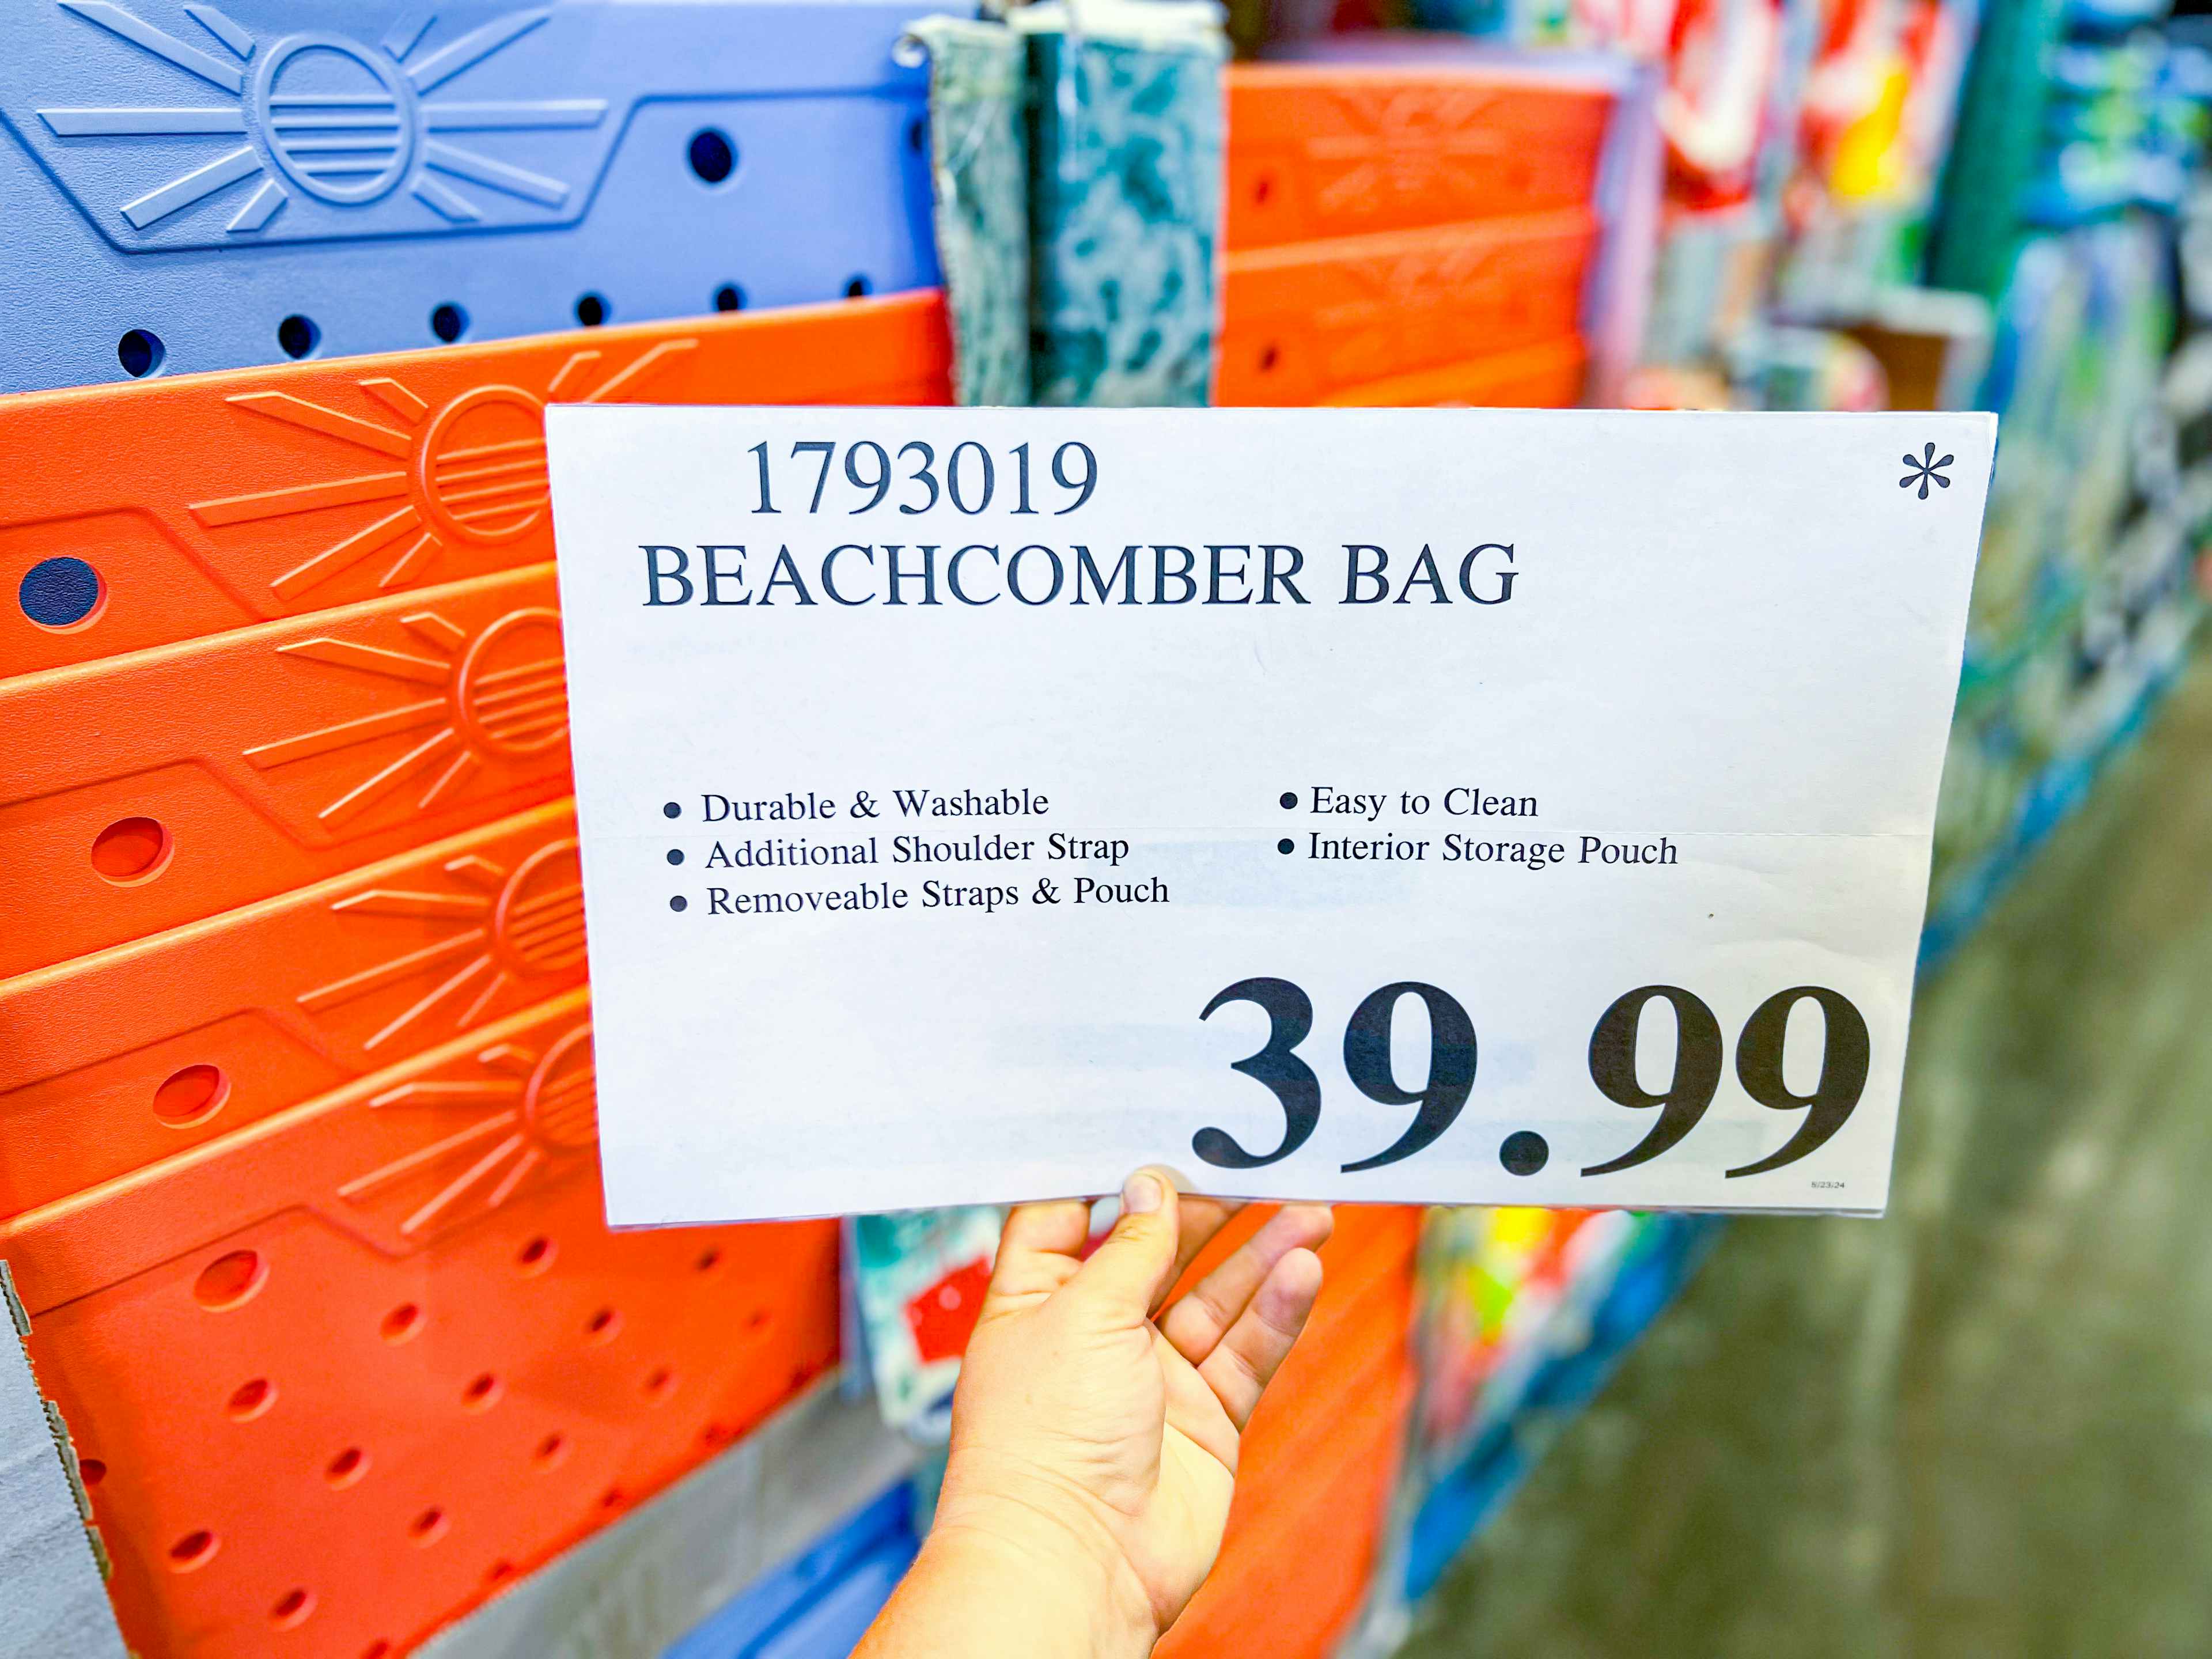 costco beachcomber bag price tag